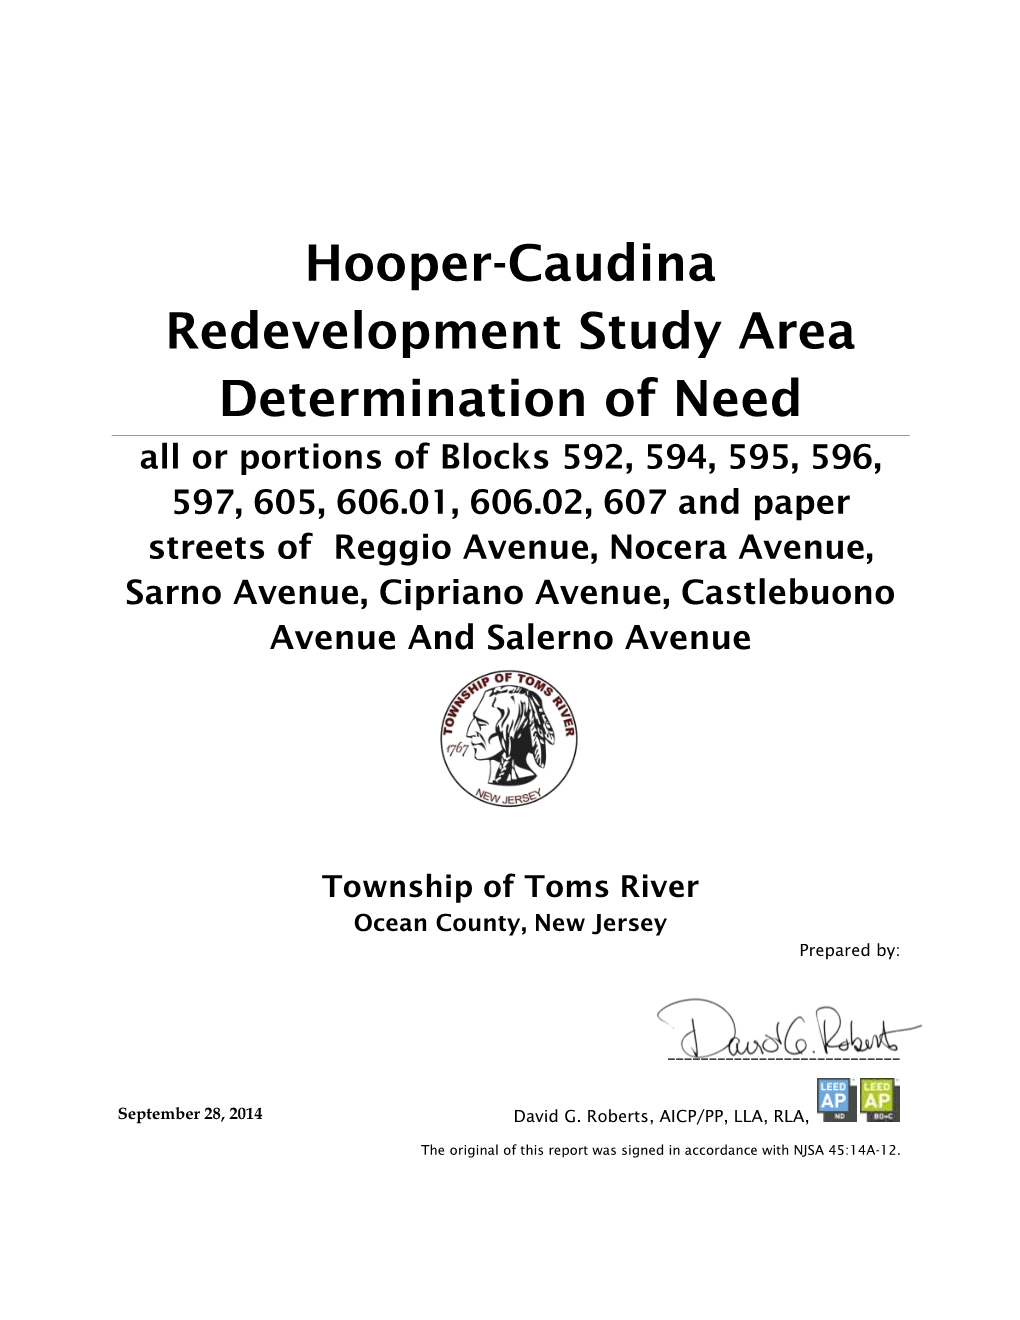 Hooper Caudina AINR Investigation Report